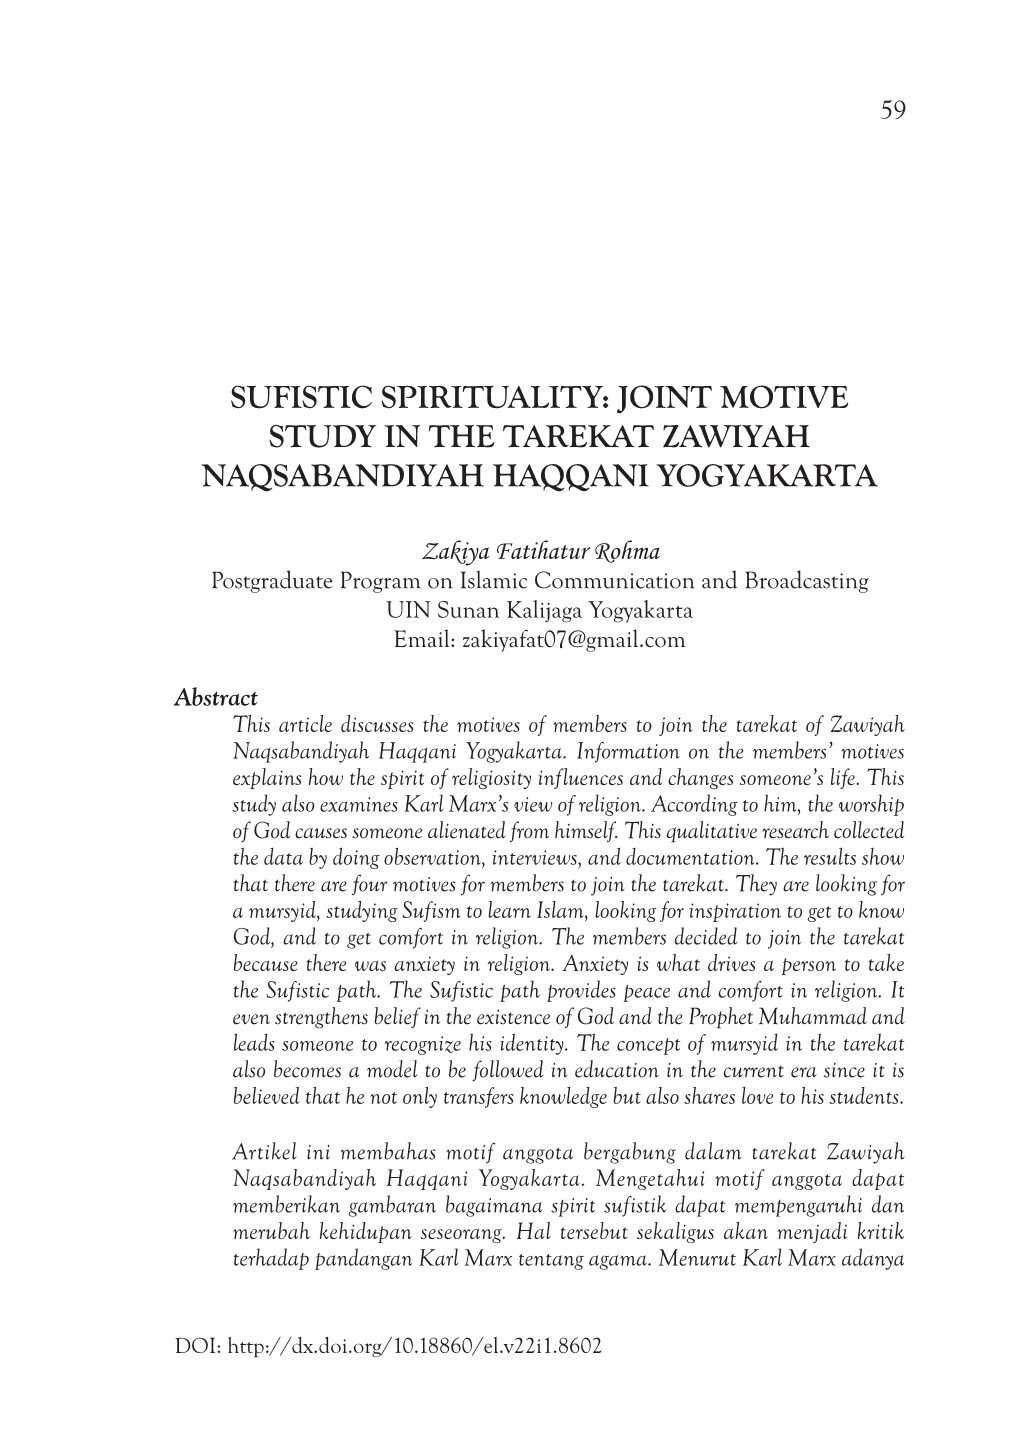 Joint Motive Study in the Tarekat Zawiyah Naqsabandiyah Haqqani Yogyakarta